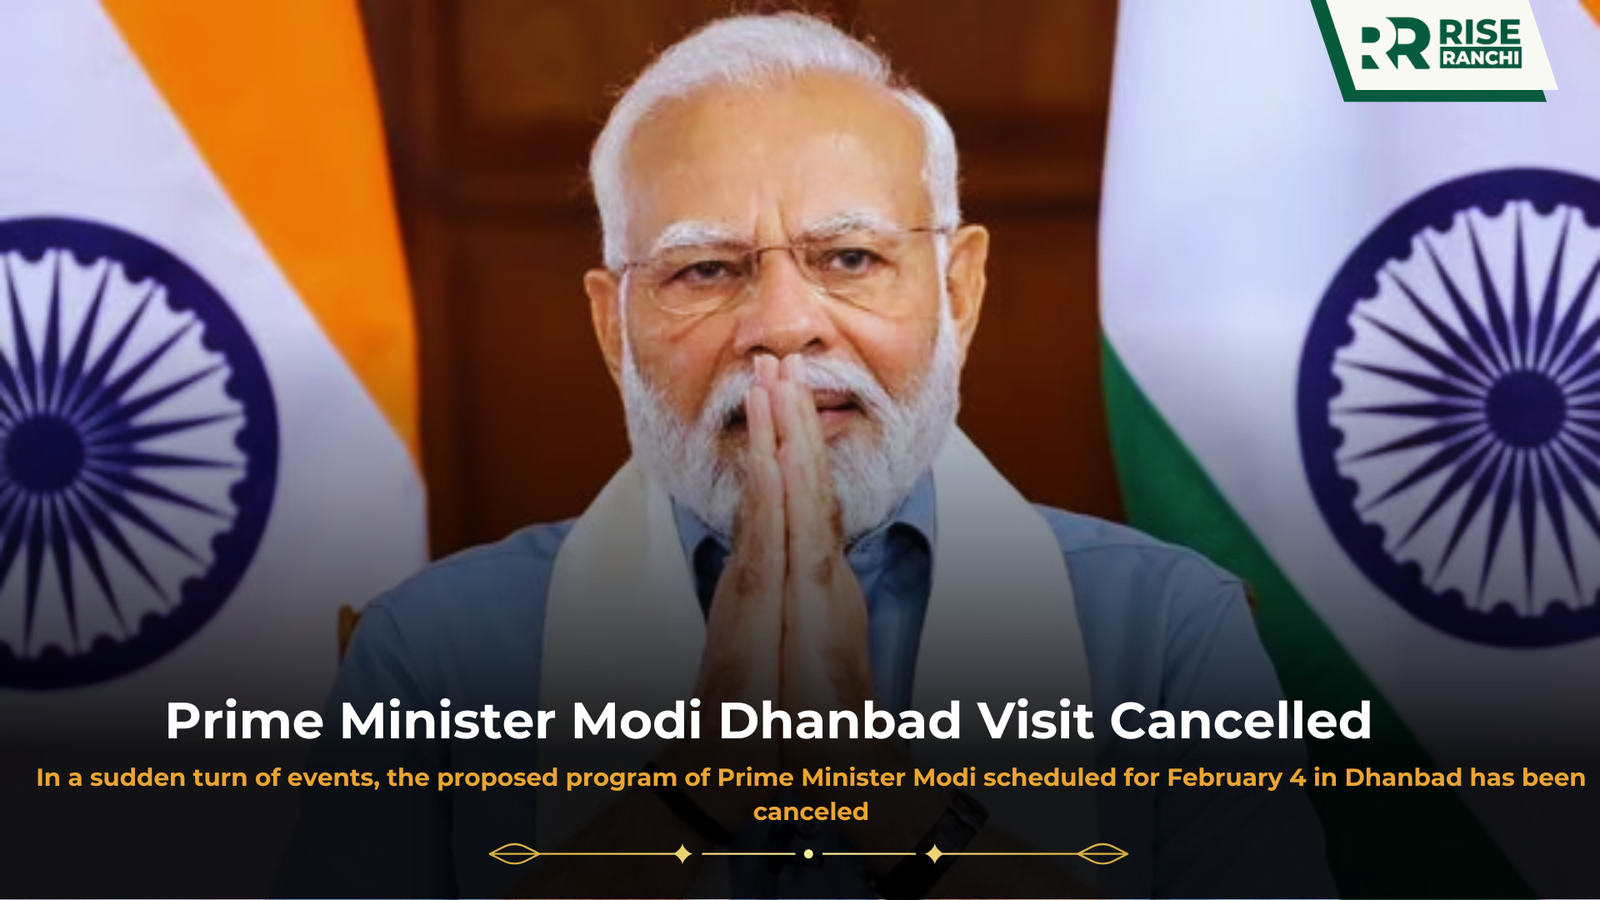 Prime Minister Modi Dhanbad Visit Cancelled